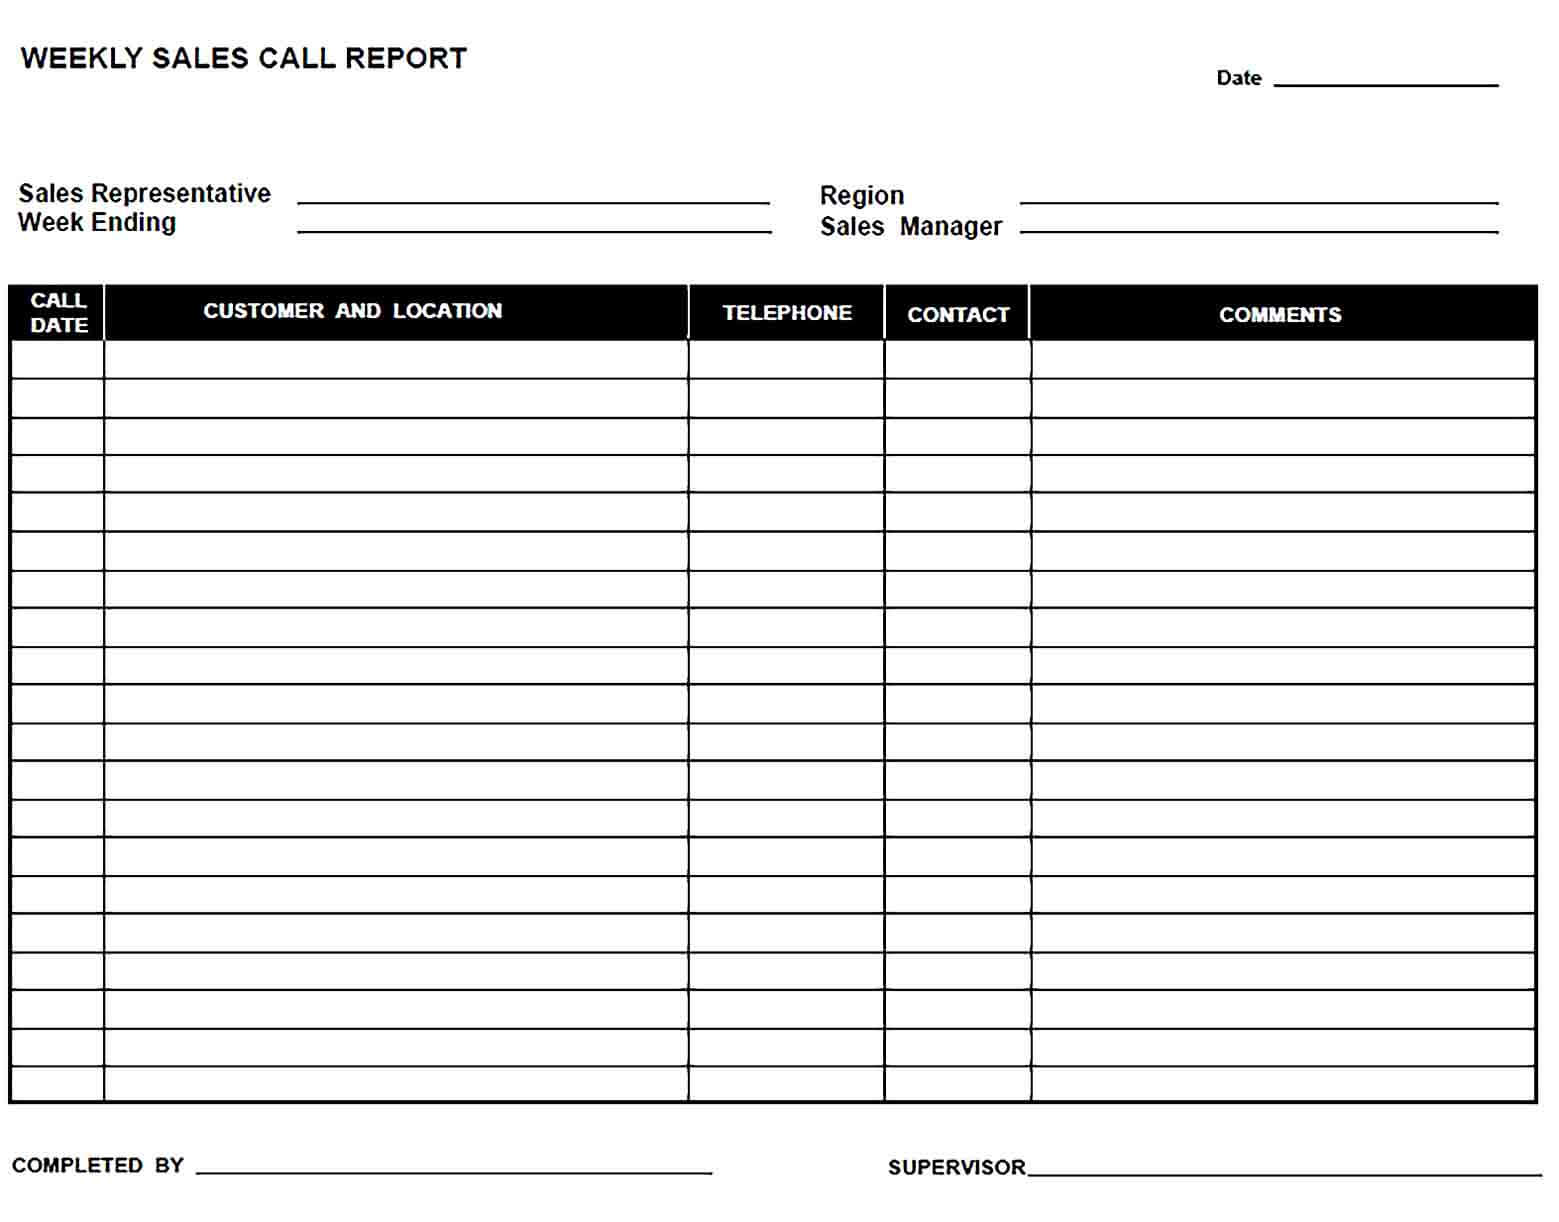 Sample sales call report template